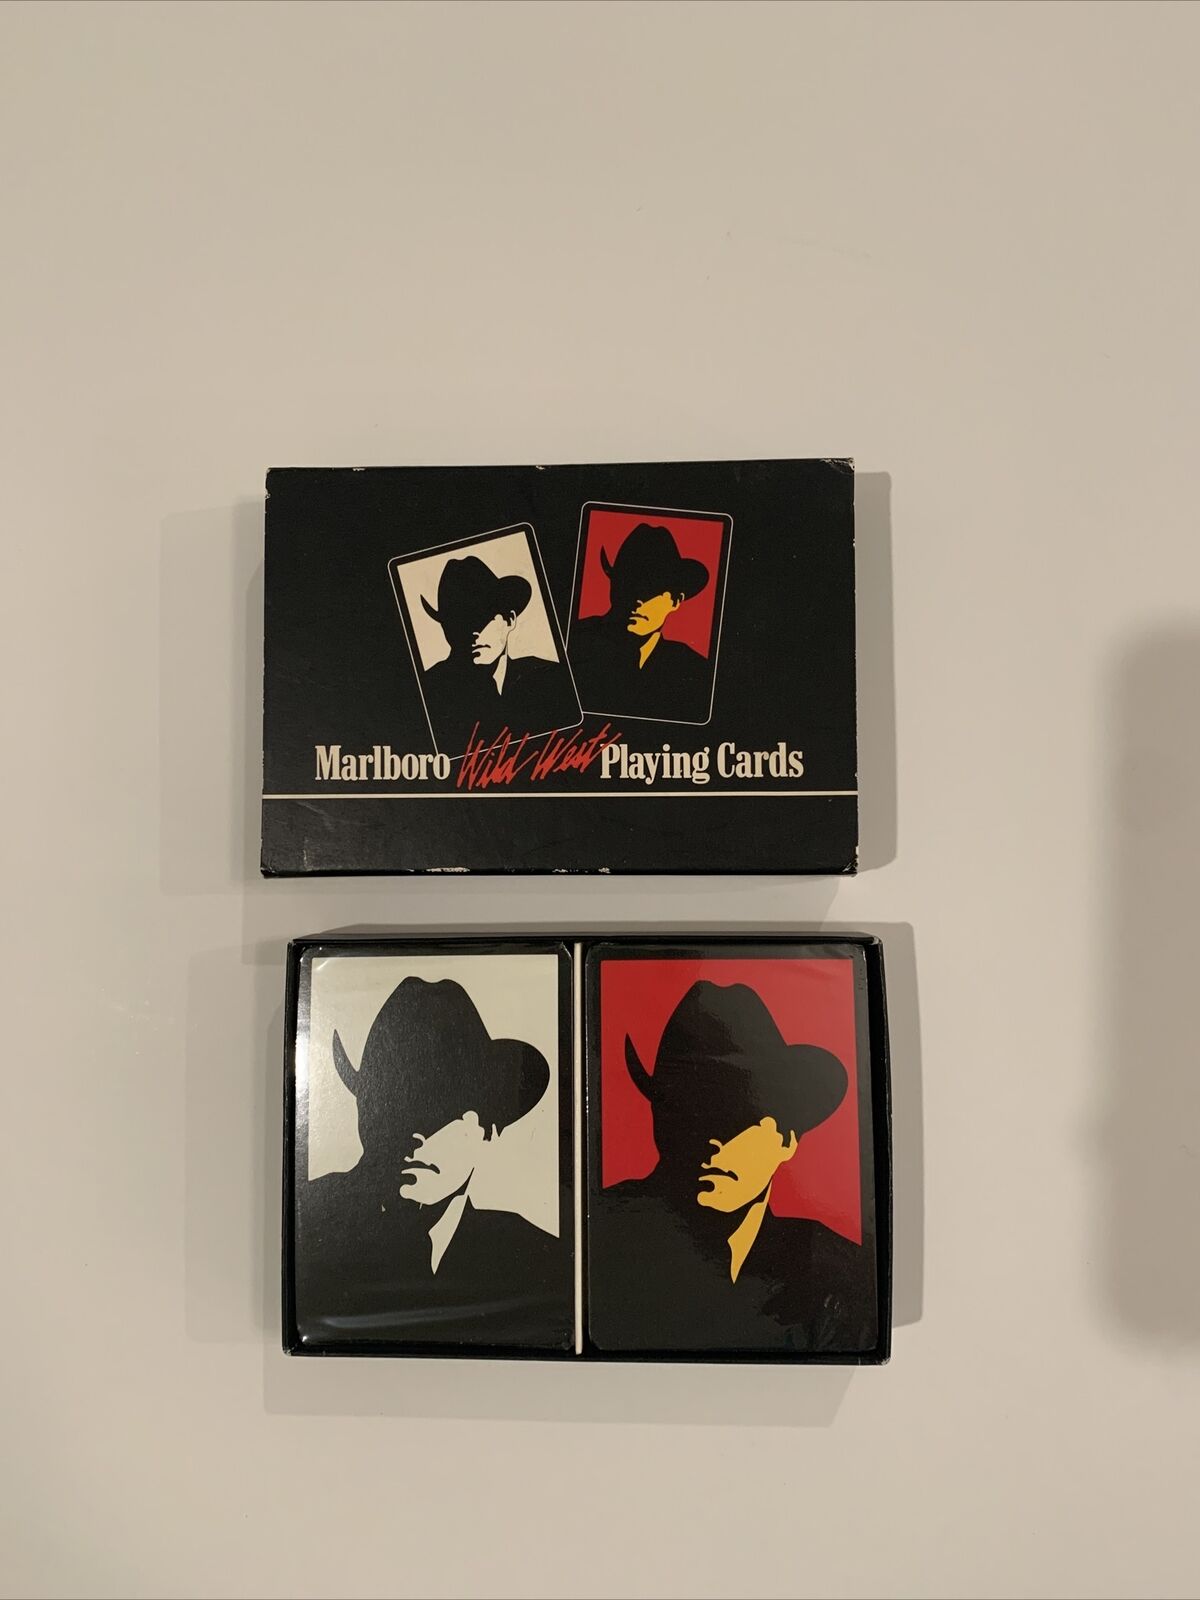 Marlboro Wild West Playing Cards 2 Decks Sealed Vintage 1991 New Philip Morris